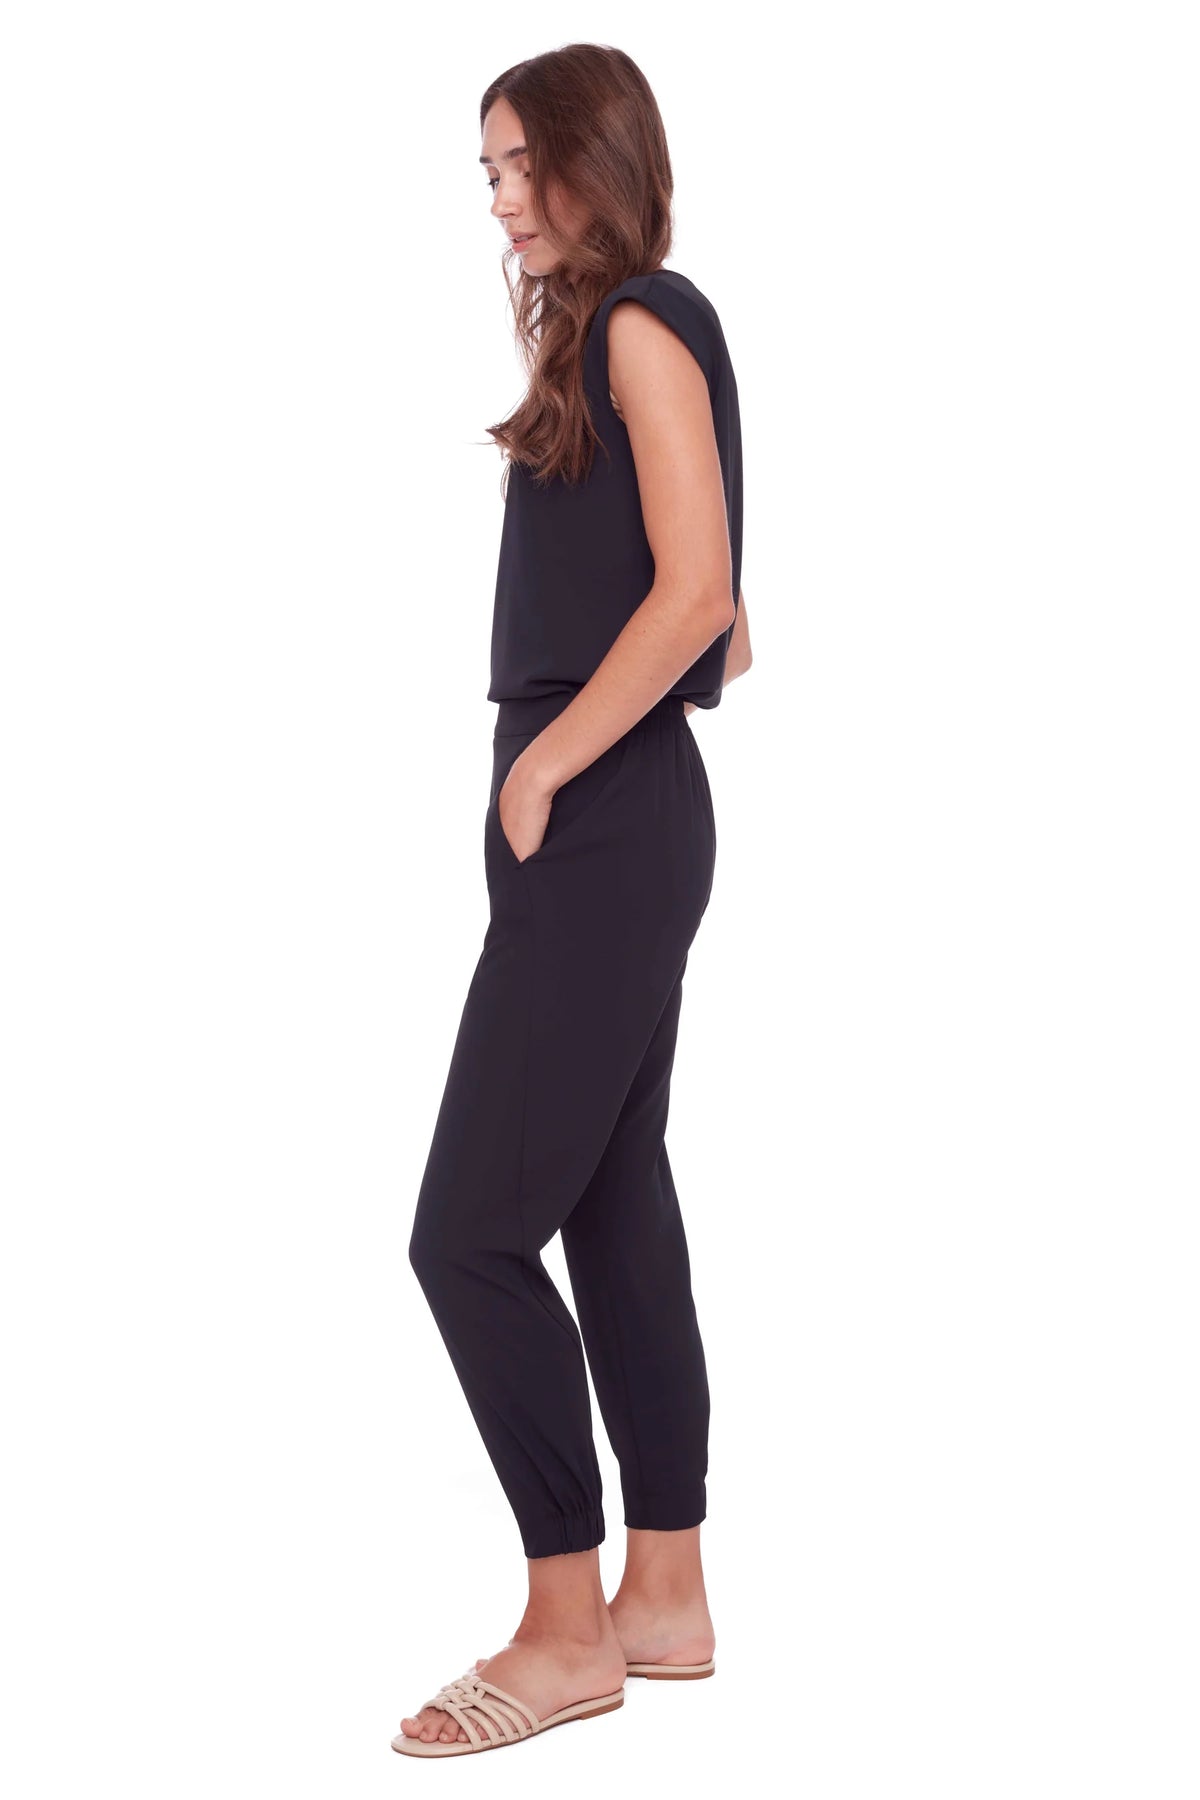 APT. 9 WOMEN'S NWT Magic Waist Tummy Control Bootcut Dress Pants Petite  Size 8P $25.00 - PicClick